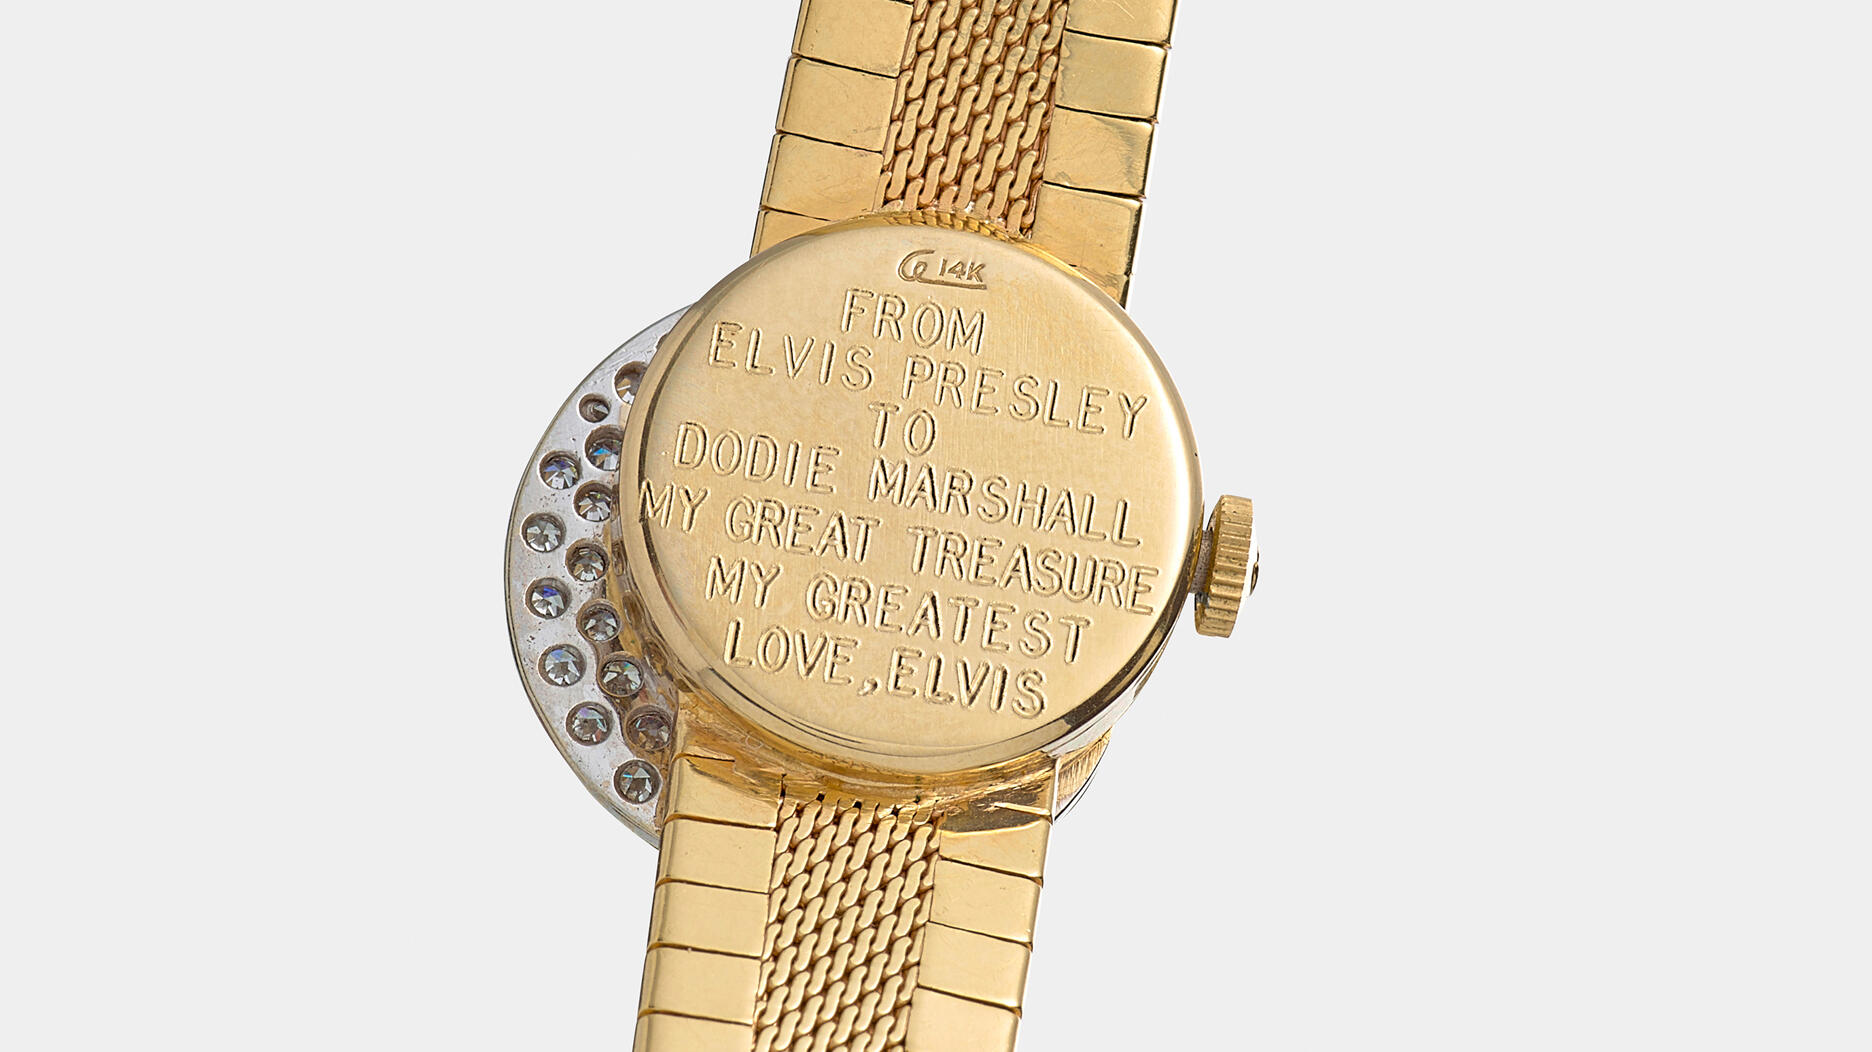 Engraved back of Baume & Mercier watch Elvis gave to Dodie Marshall